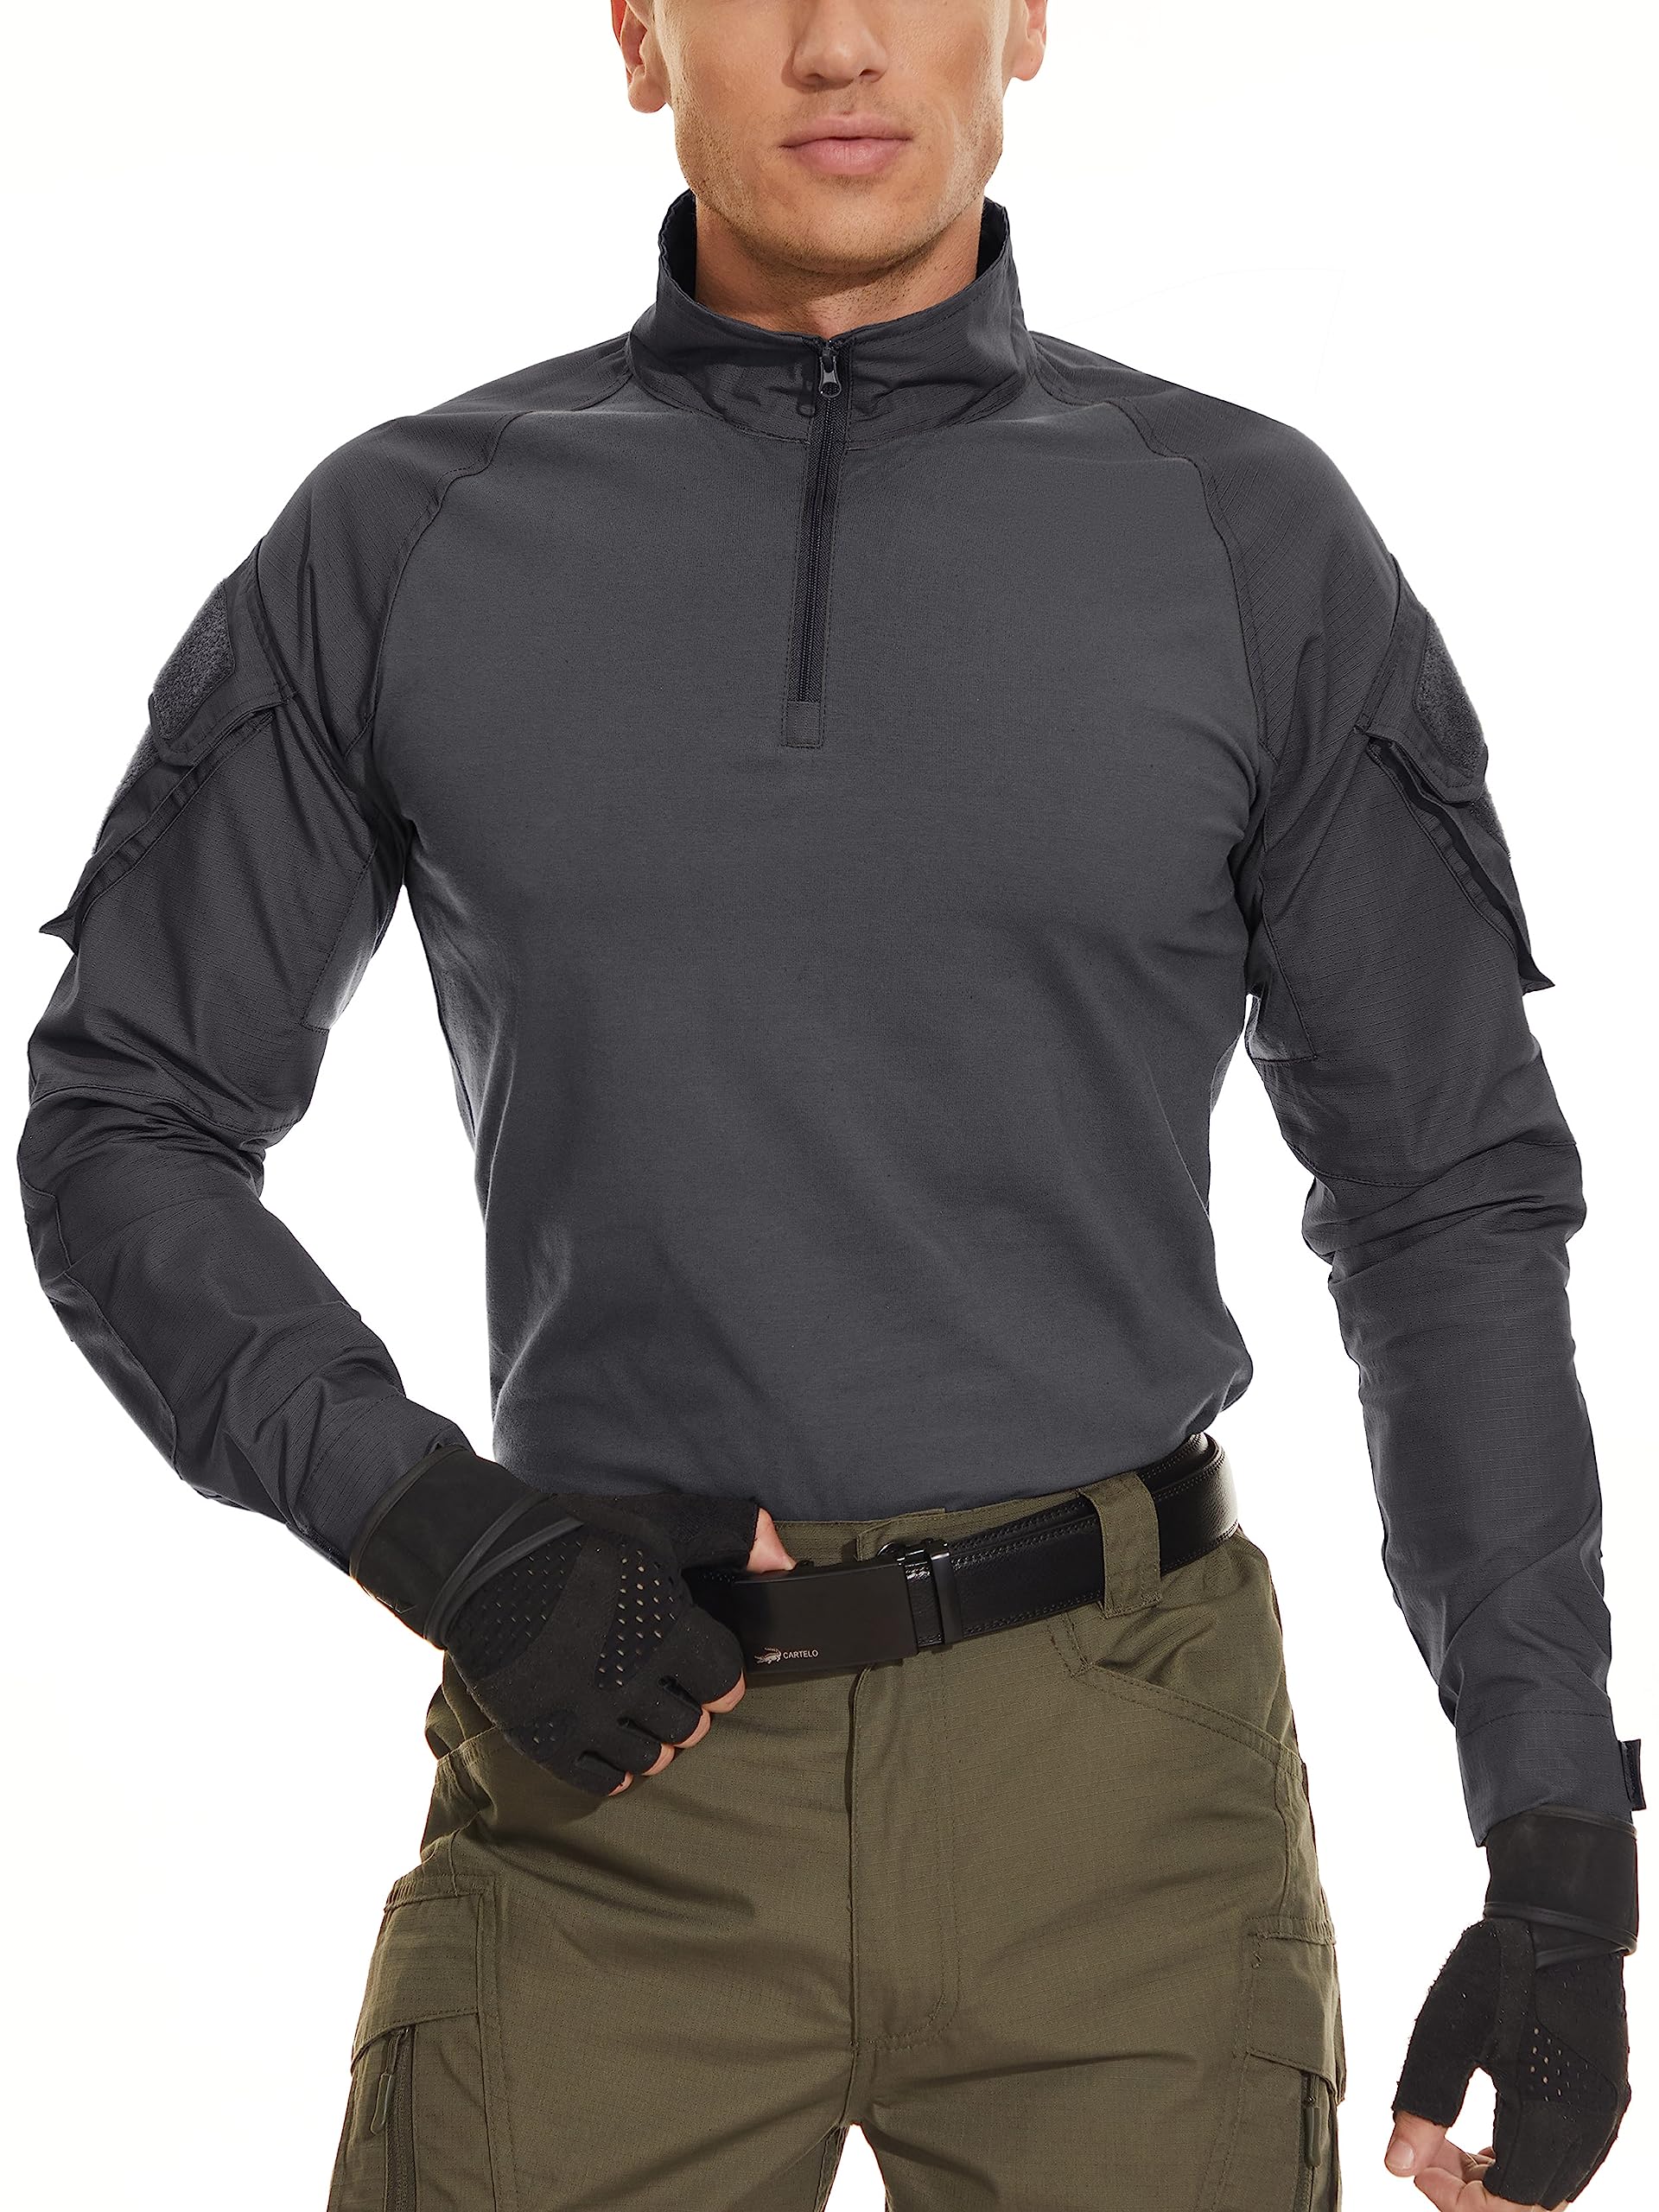 MAGCOMSEN Men's Tactical Long Sleeve Shirt - Combat, Military, Hiking, Work, Summer, Fishing